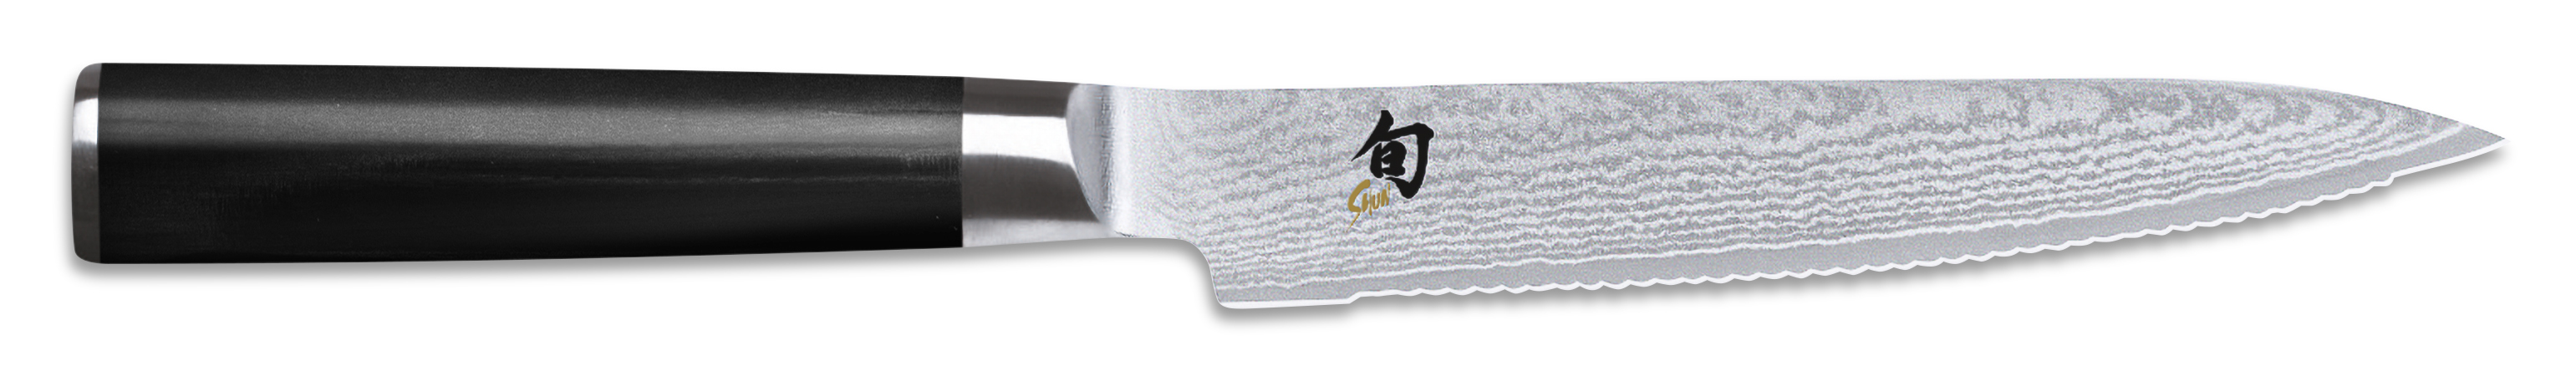 DM-0722: SHUN Kochmesser / Cook Knife To mato Knife 6,0 (15,0 cm)